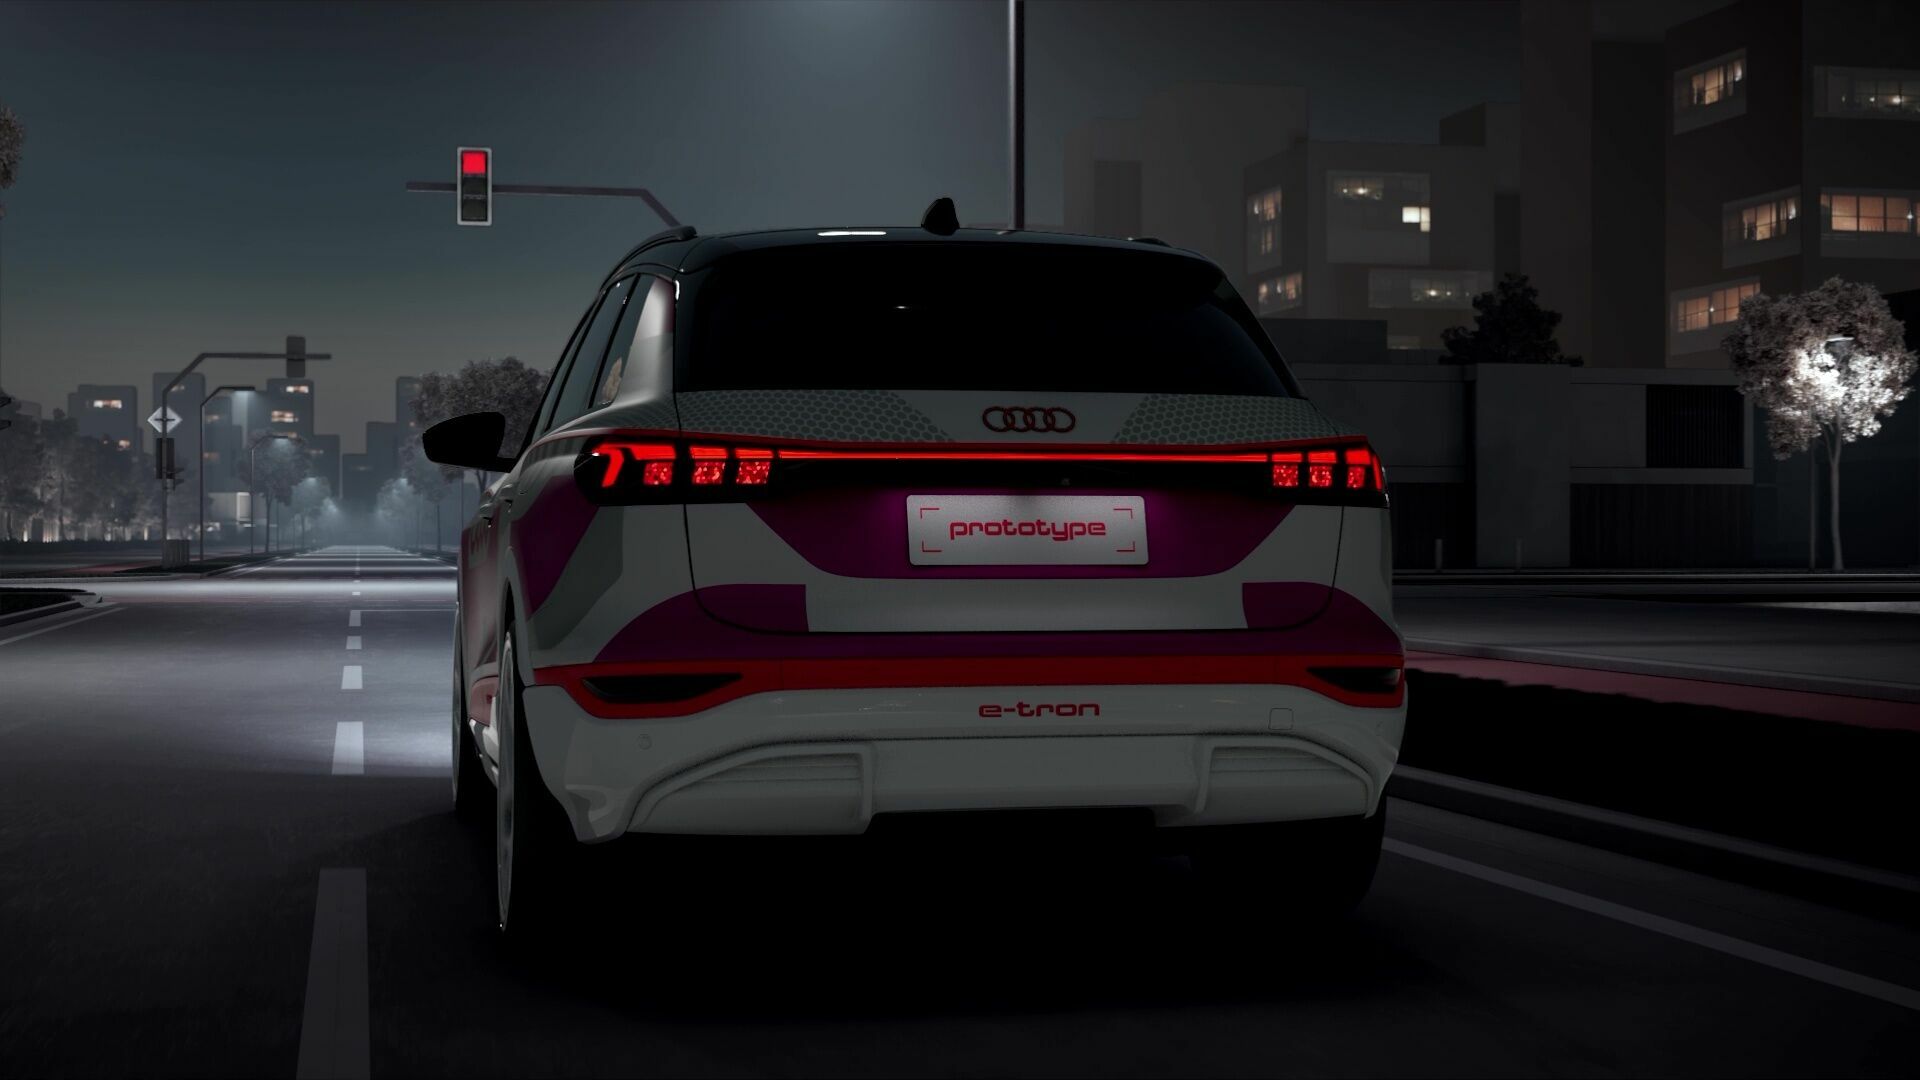 Audi Q6 e-tron prototype – Digital OLED rear lights – Animation